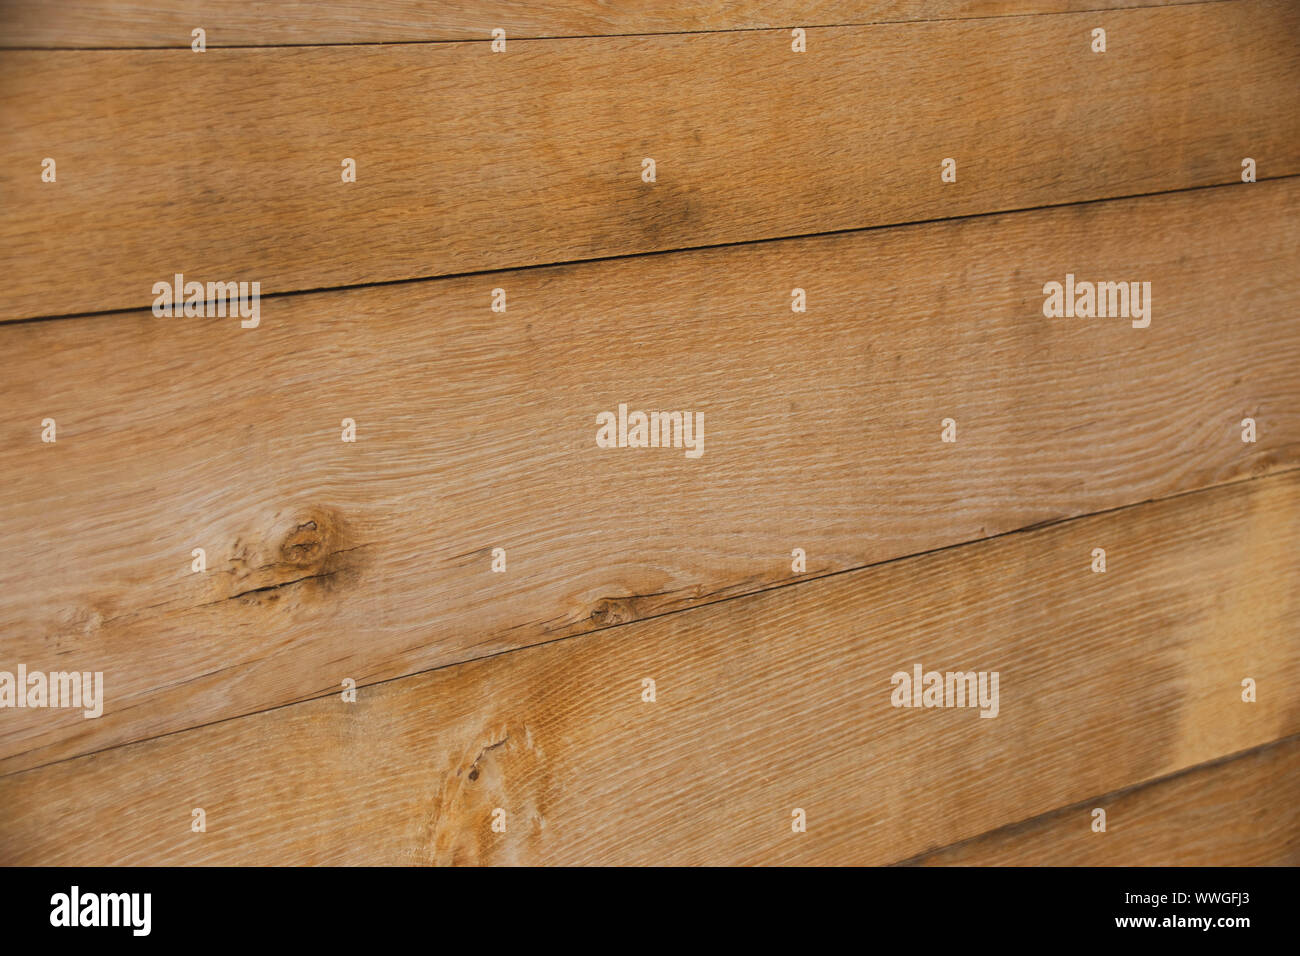 Oak wood panels or planks Stock Photo